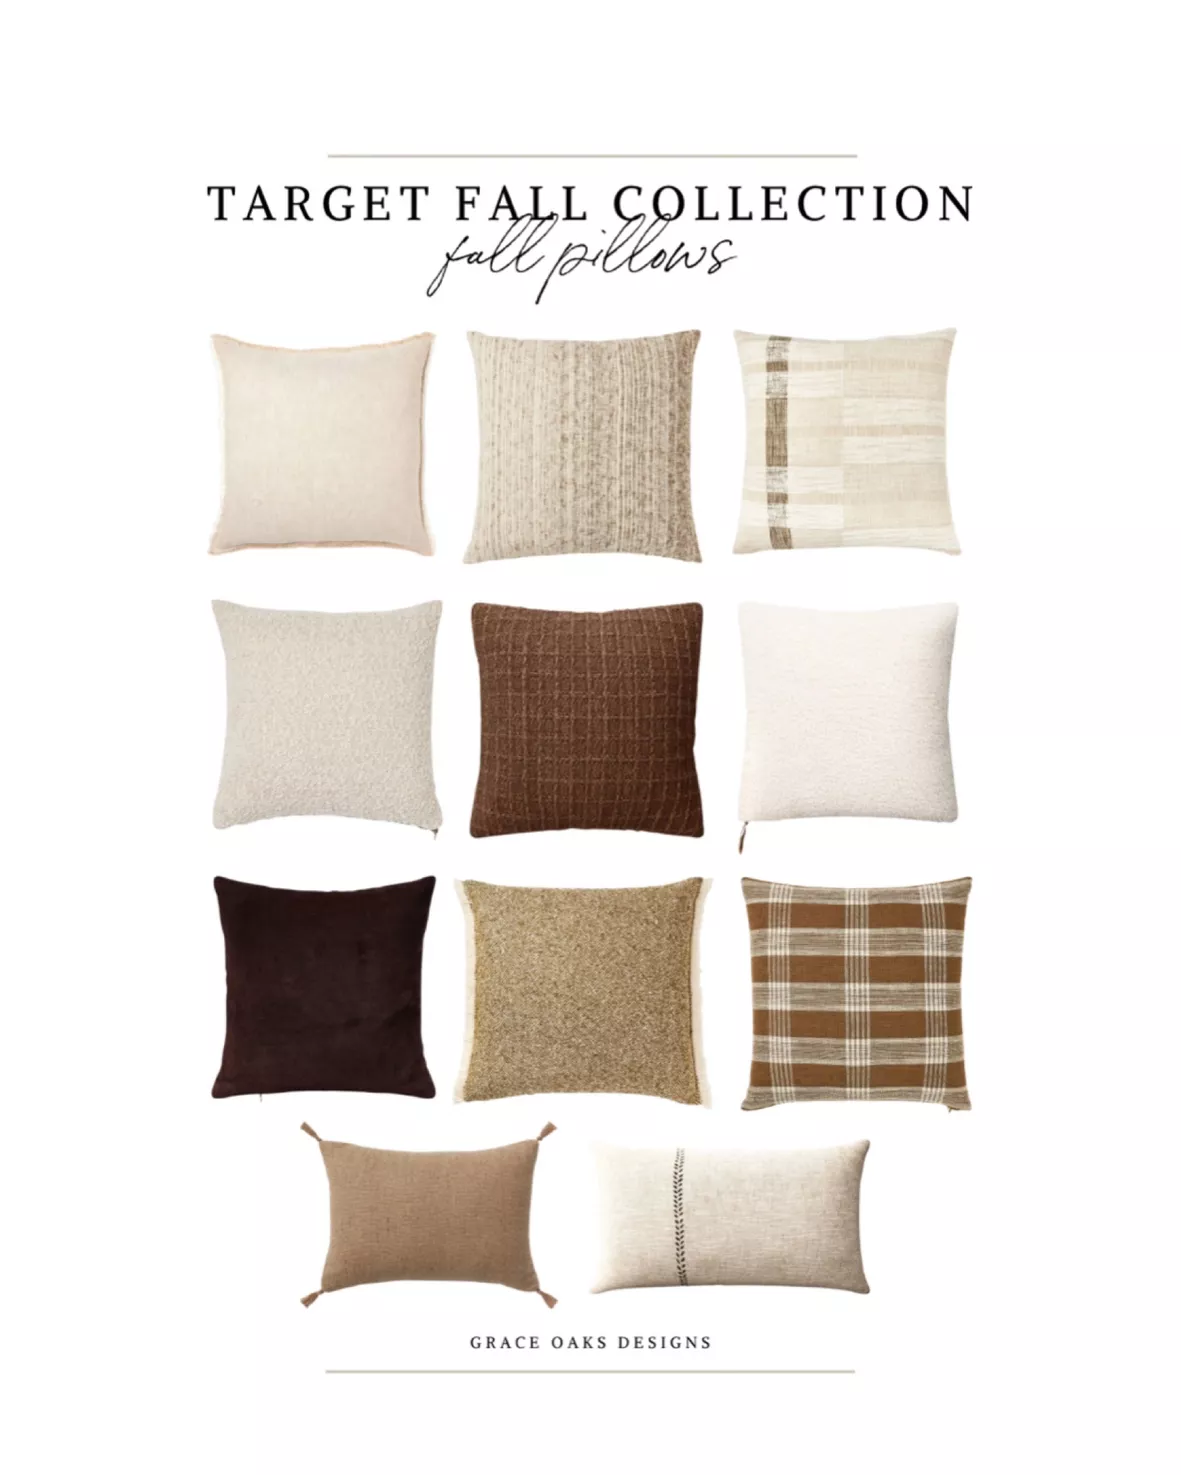 Oversized Textural Woven Throw Pillow Cream - Threshold™ : Target